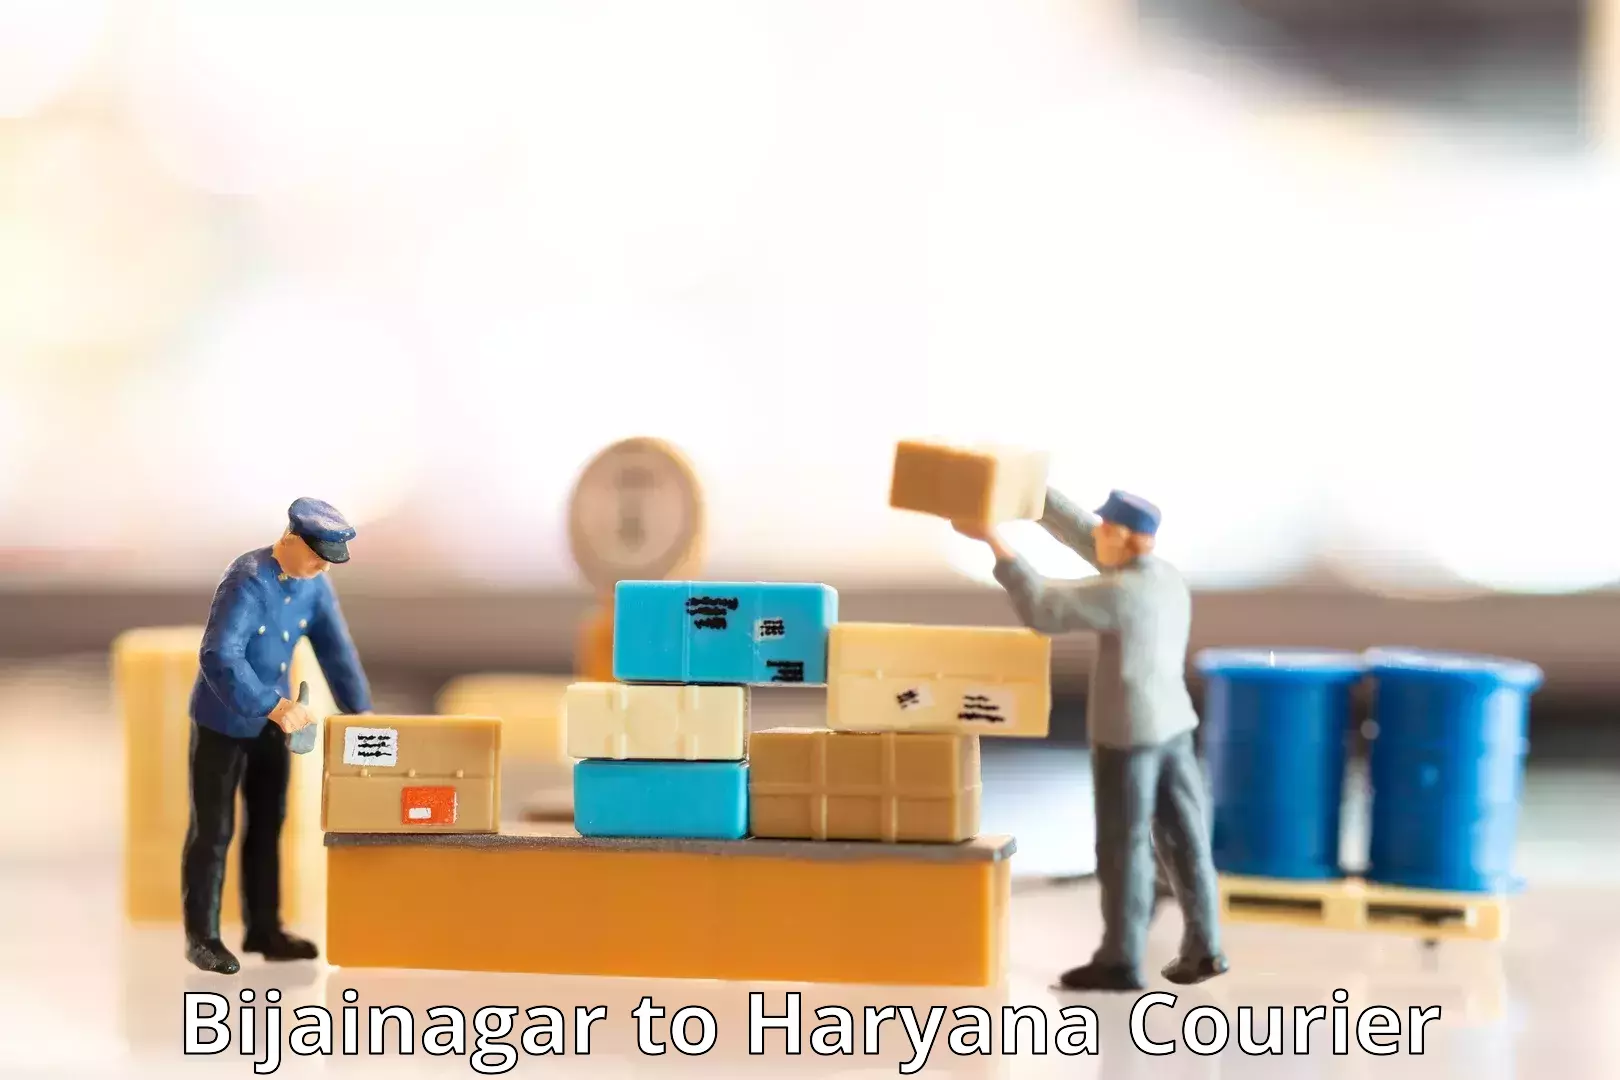 Courier service comparison Bijainagar to Haryana